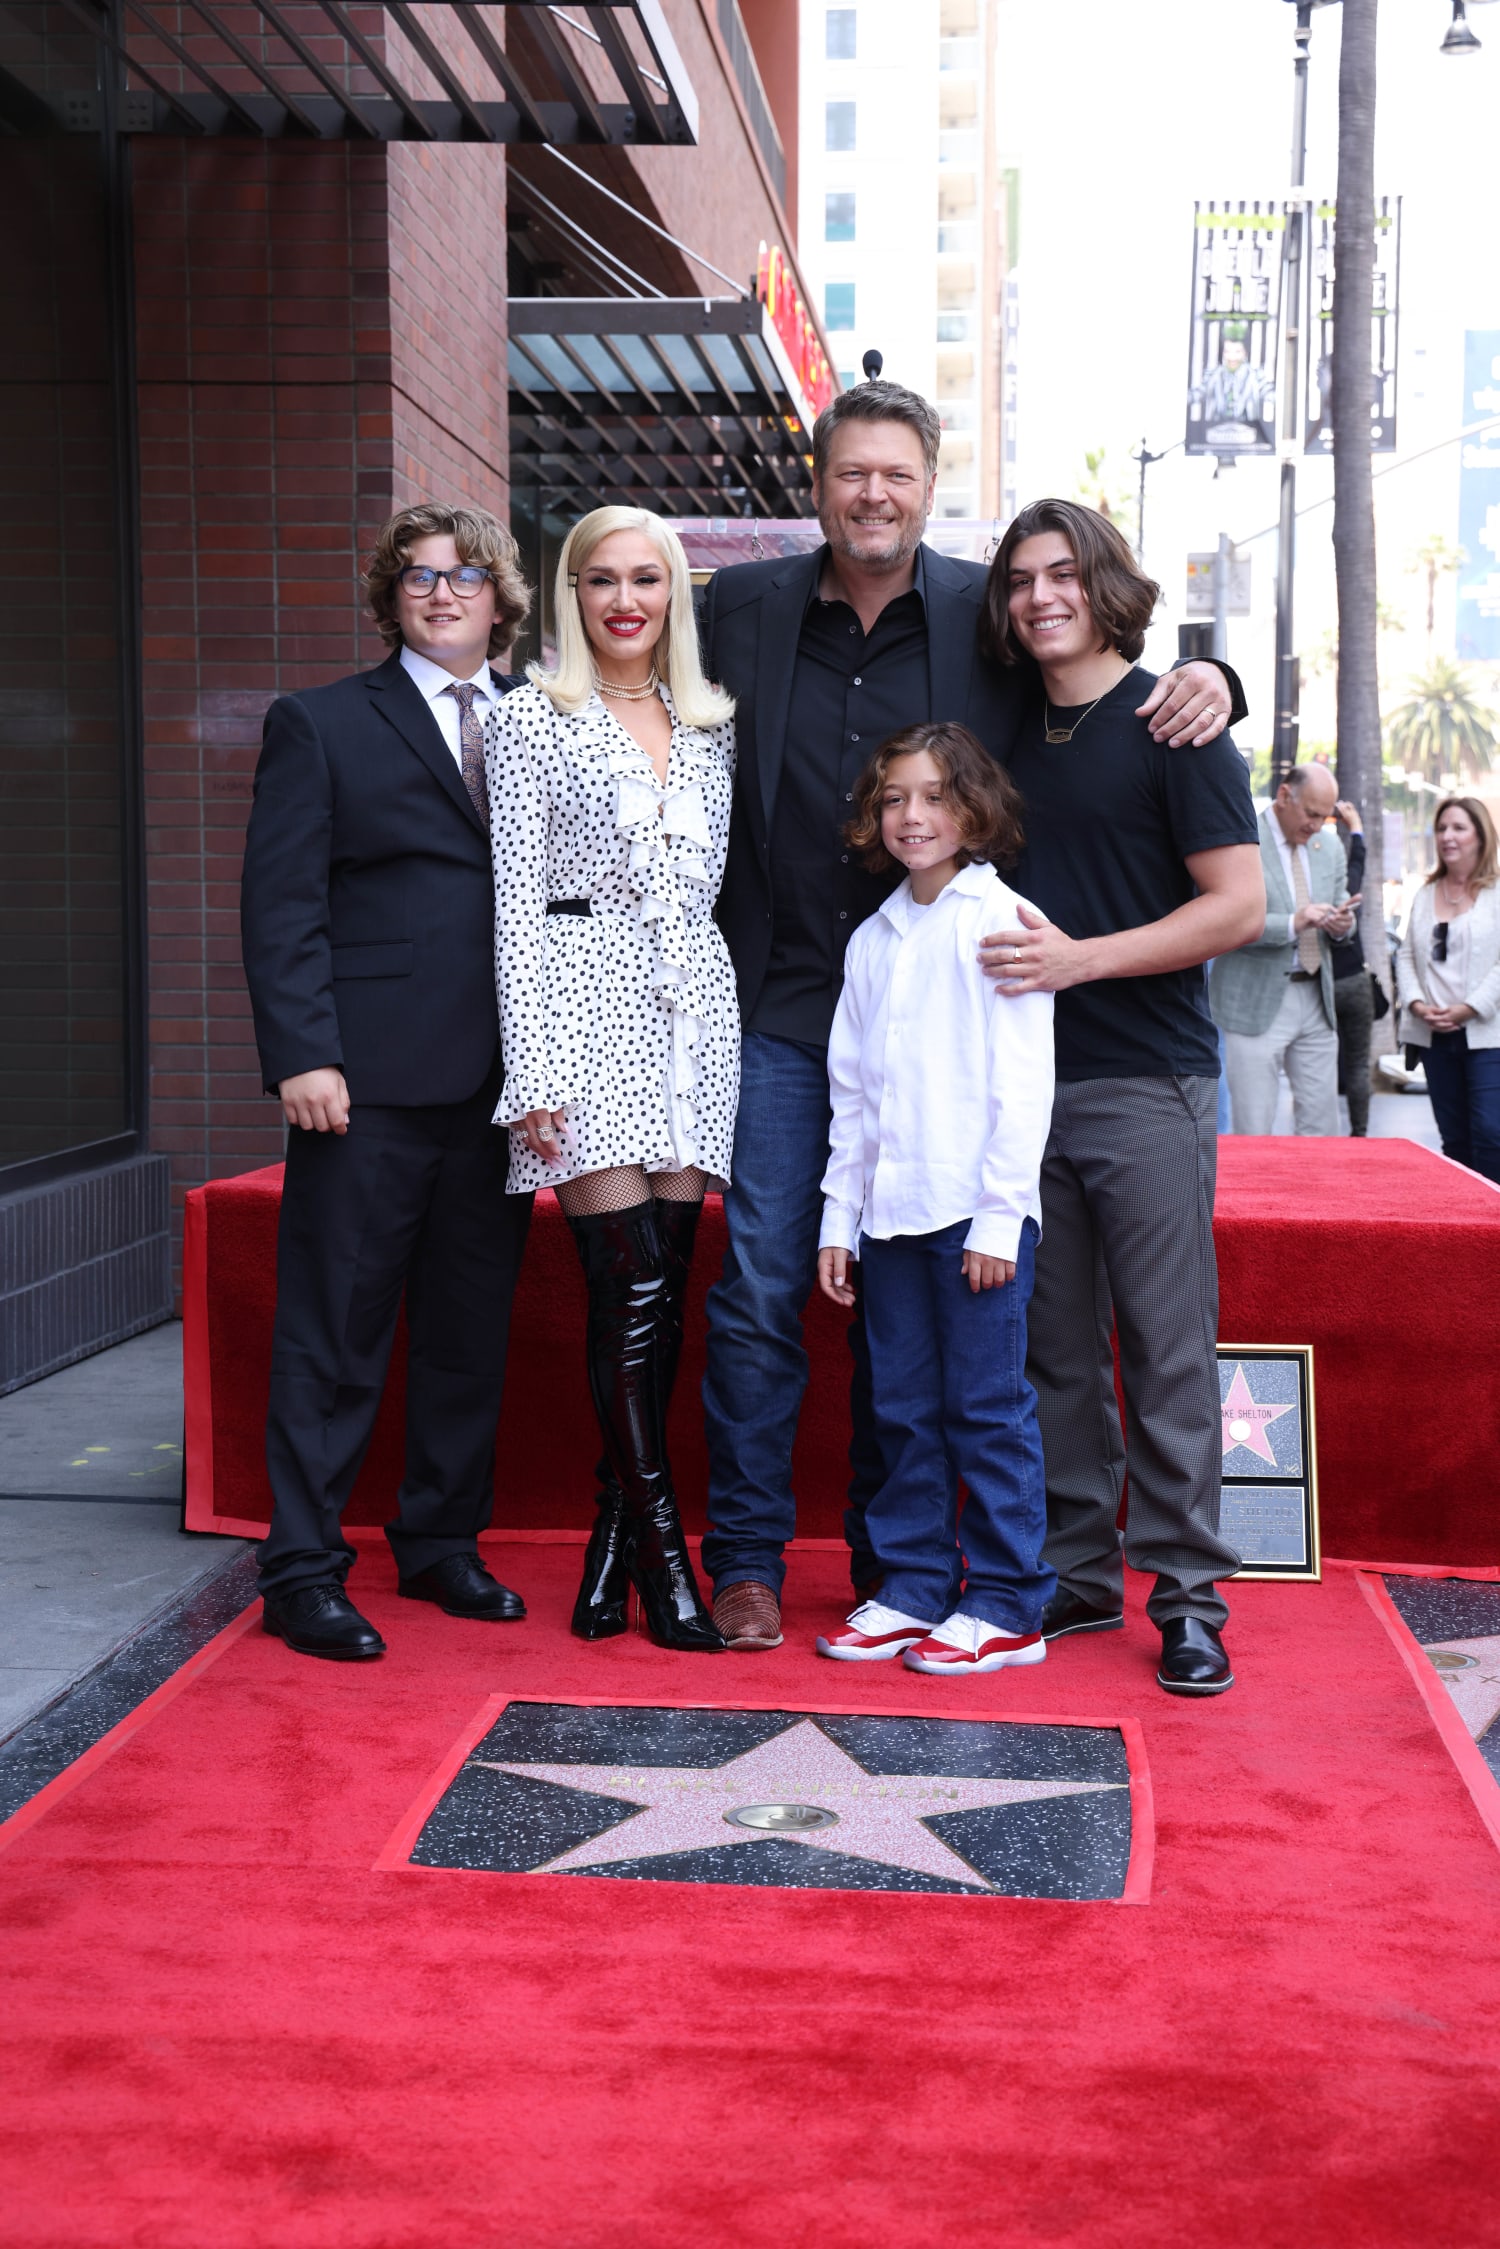 Gwen Stefani and Sons Make Public Appearance With Stepdad Blake Shelton